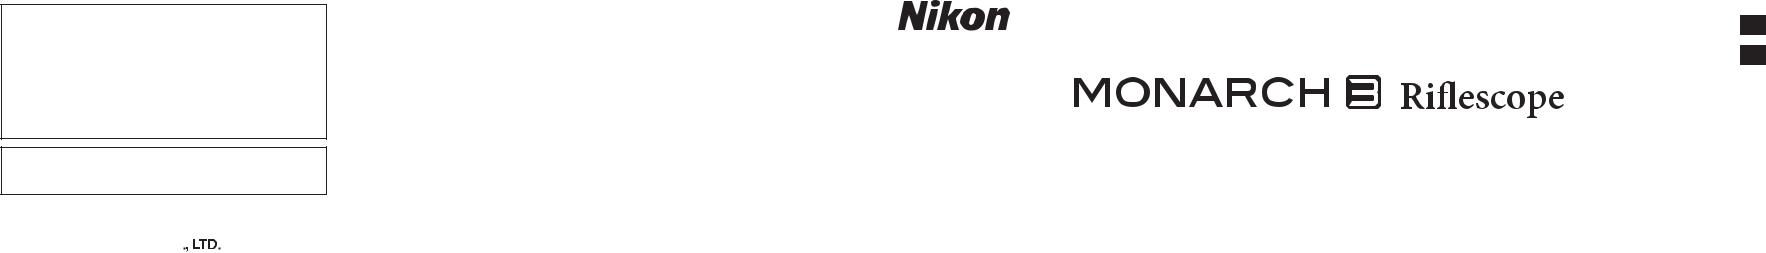 Nikon MONARCH 3 FFP Riflescope Instruction Manual